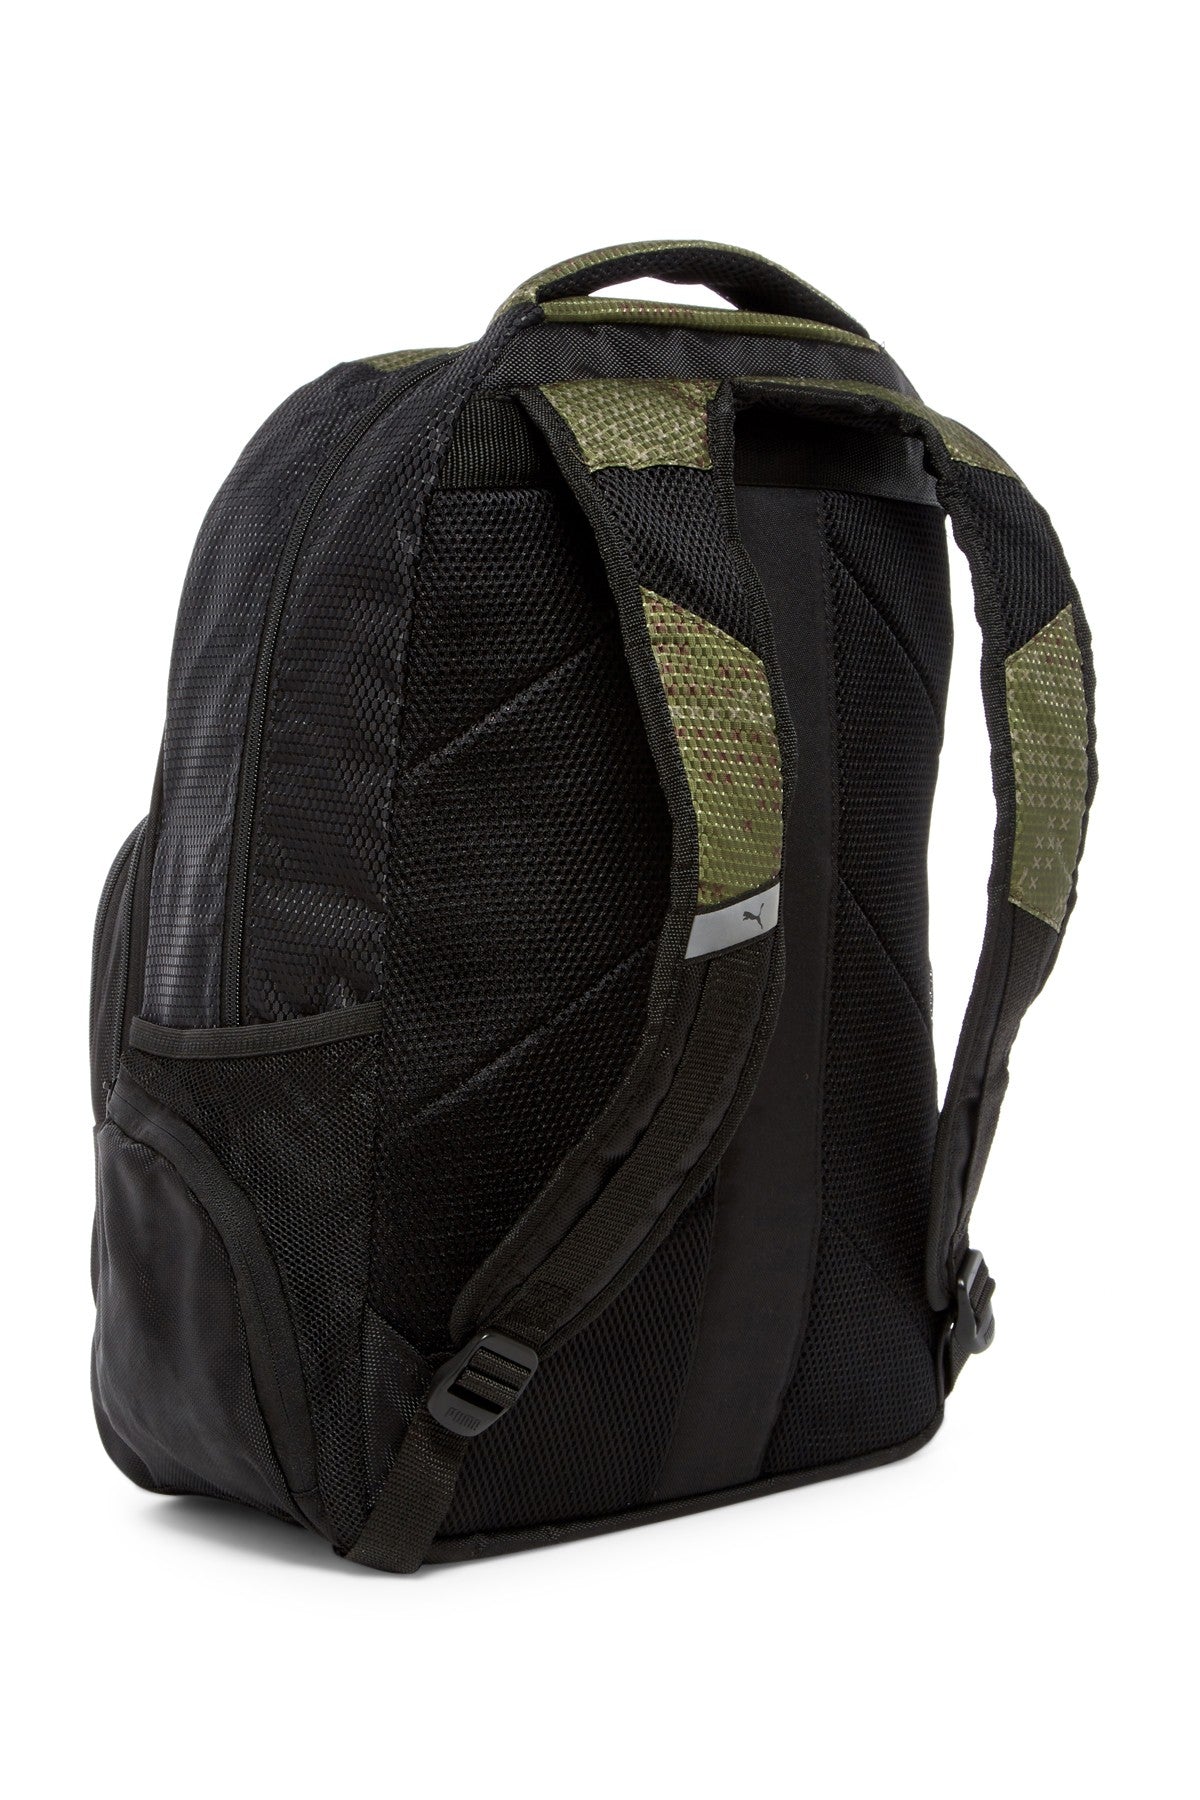 Puma Camo Audible 19” Backpack